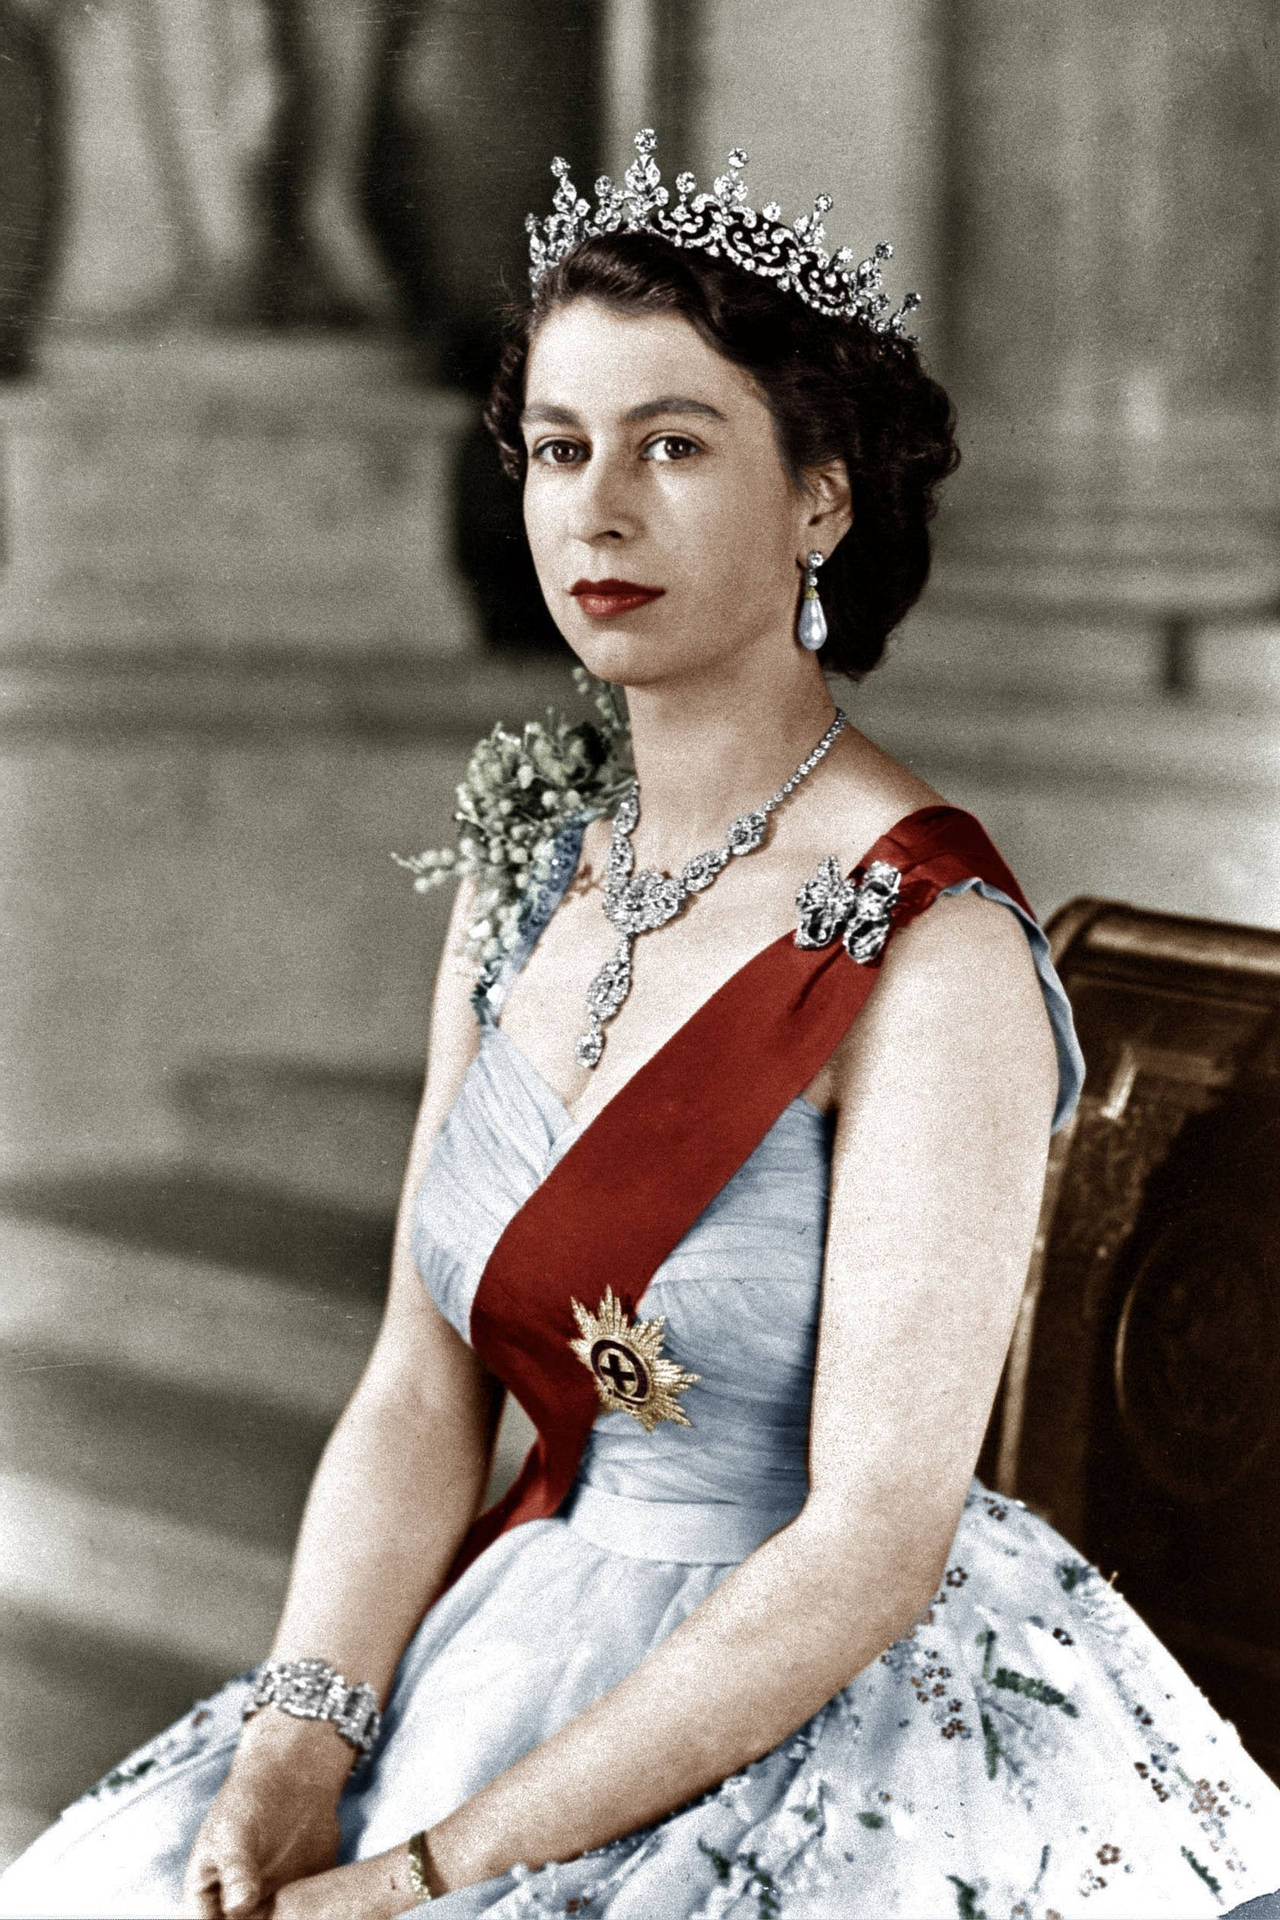 Queen Elizabeth Vintage Young Photograph Wallpaper